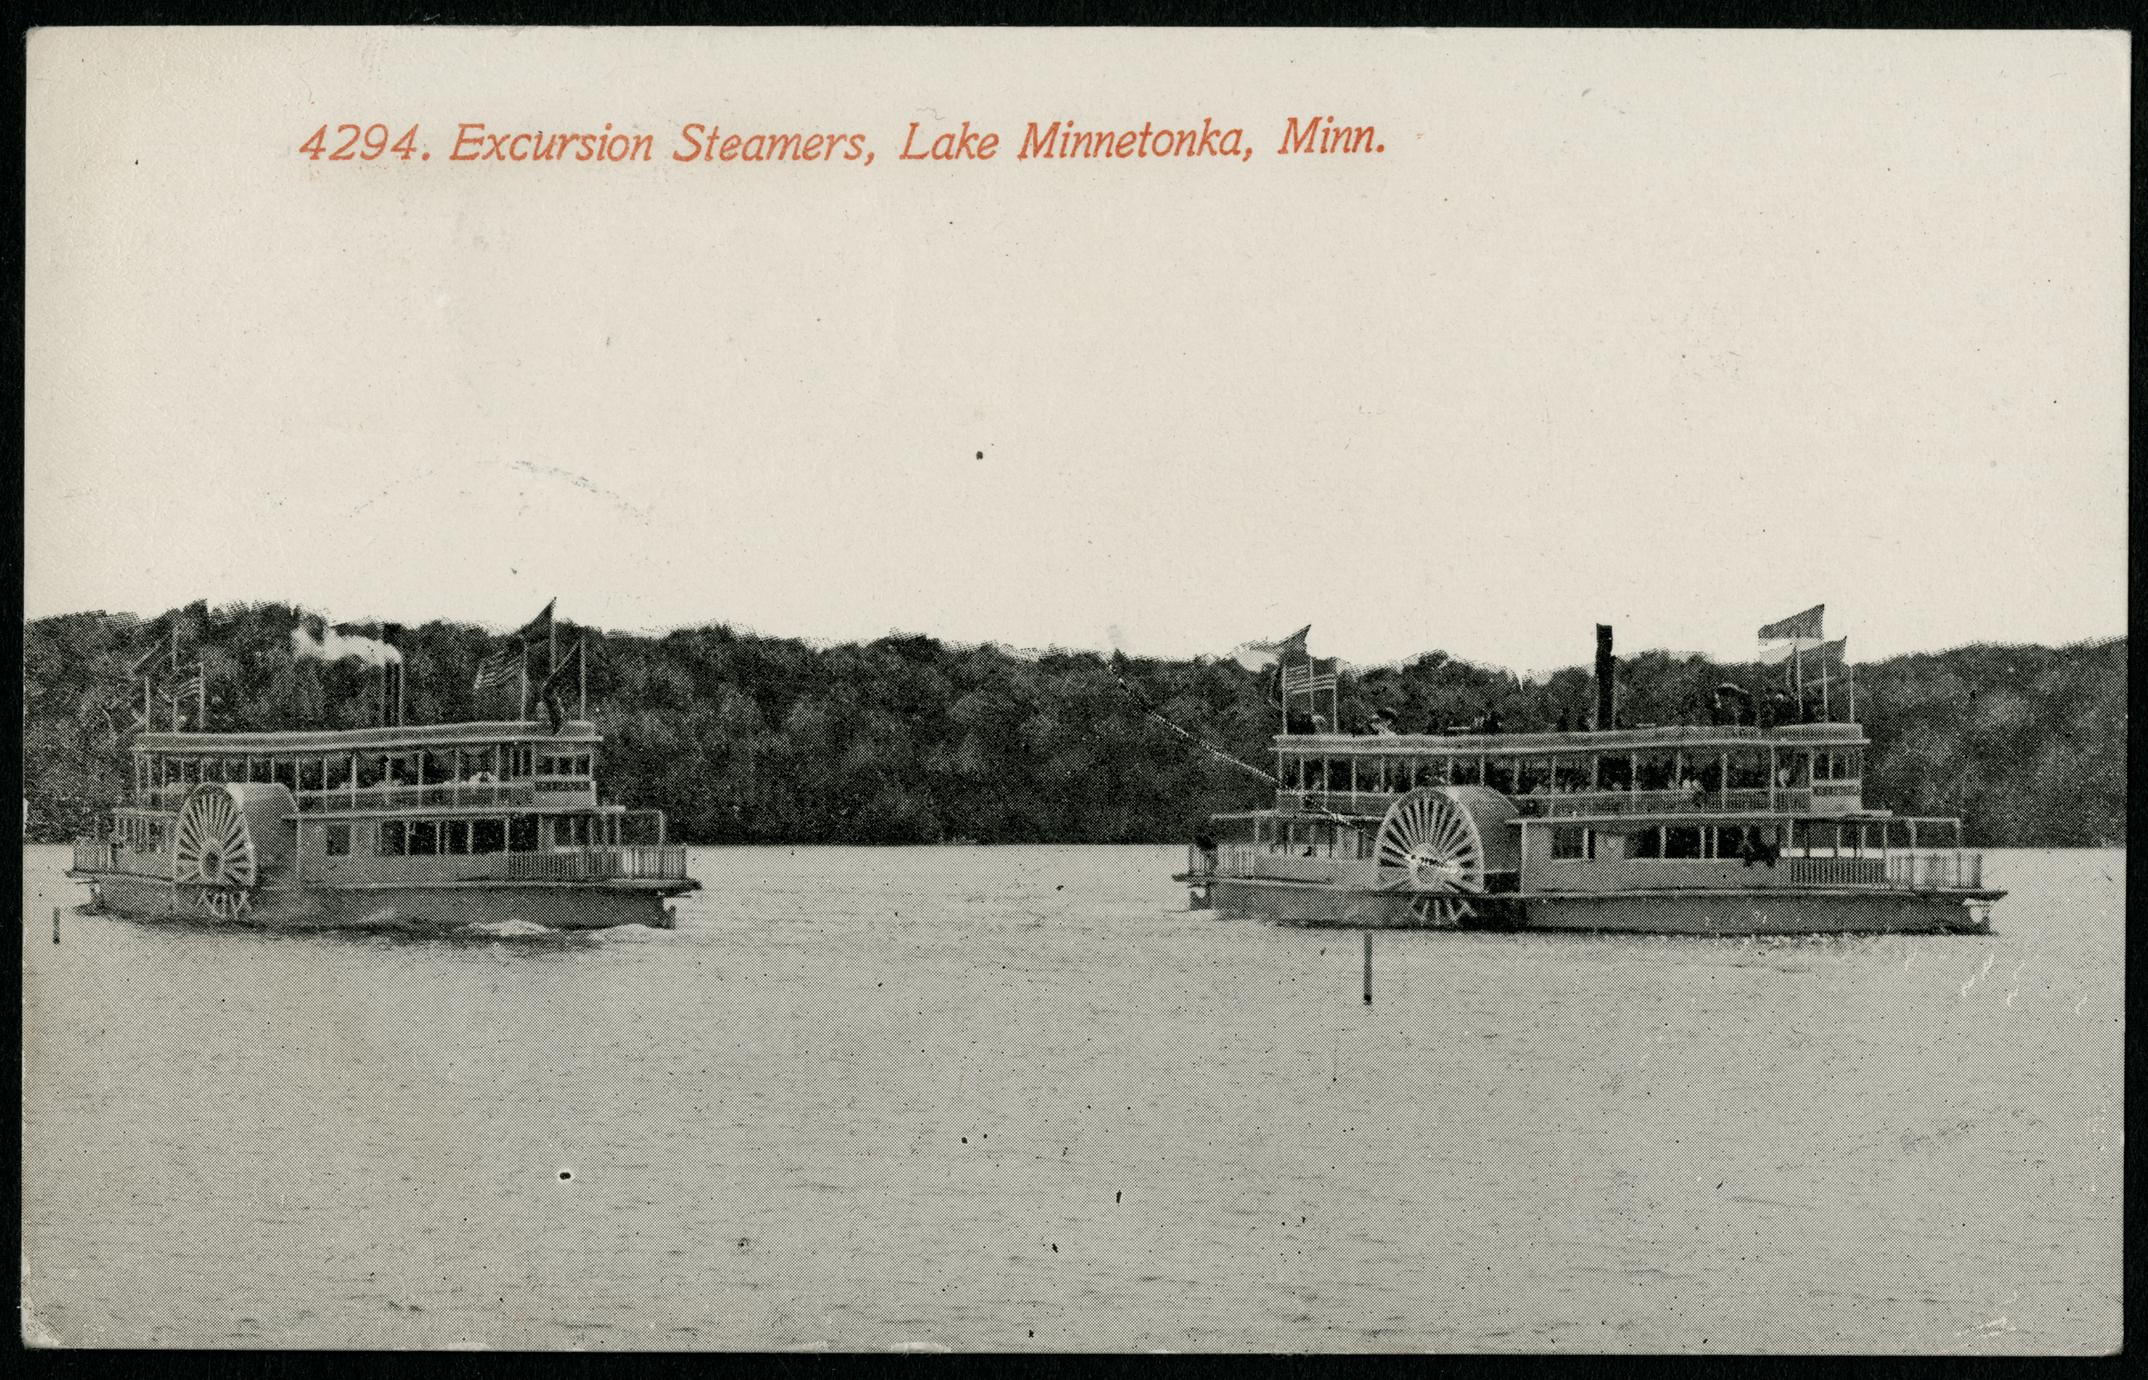 Lake Minnetonka, Minnesota